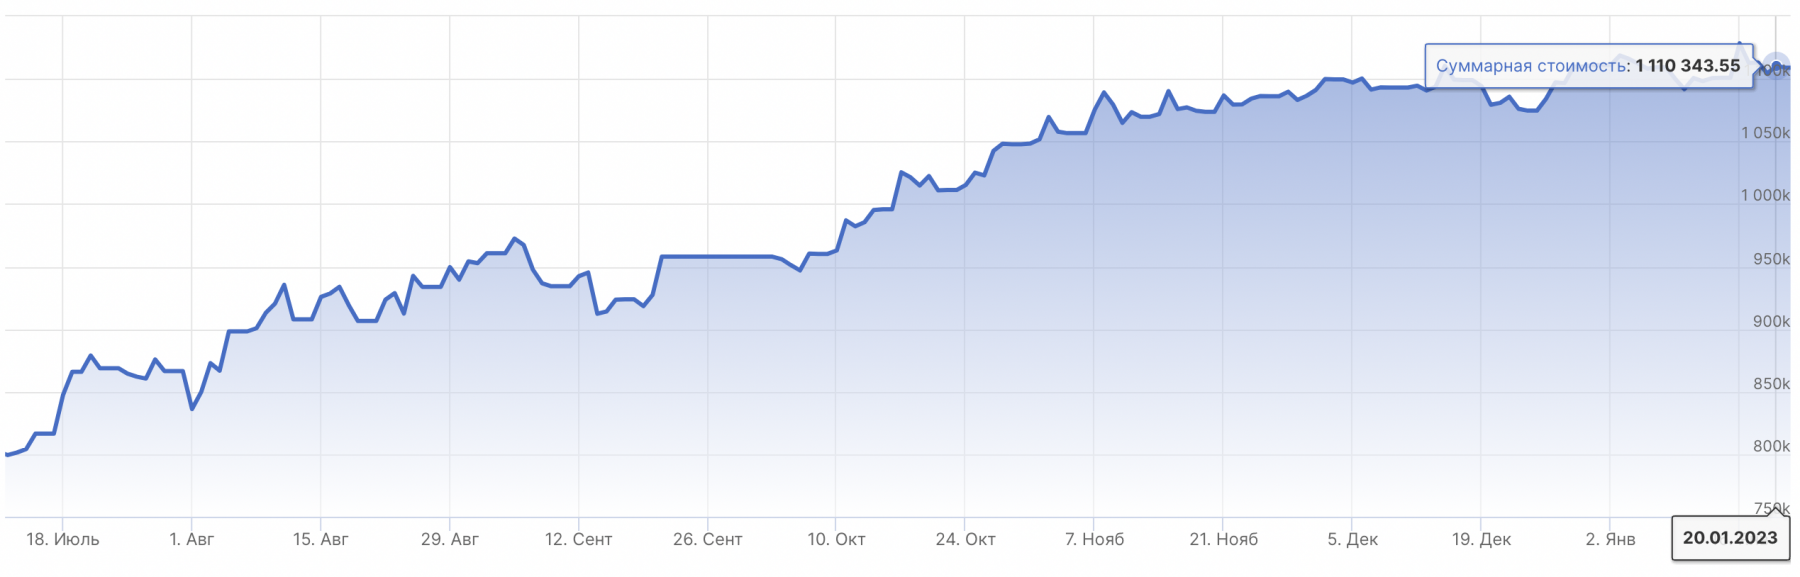 Итоги недели на рынке акций РФ: +9532 руб.